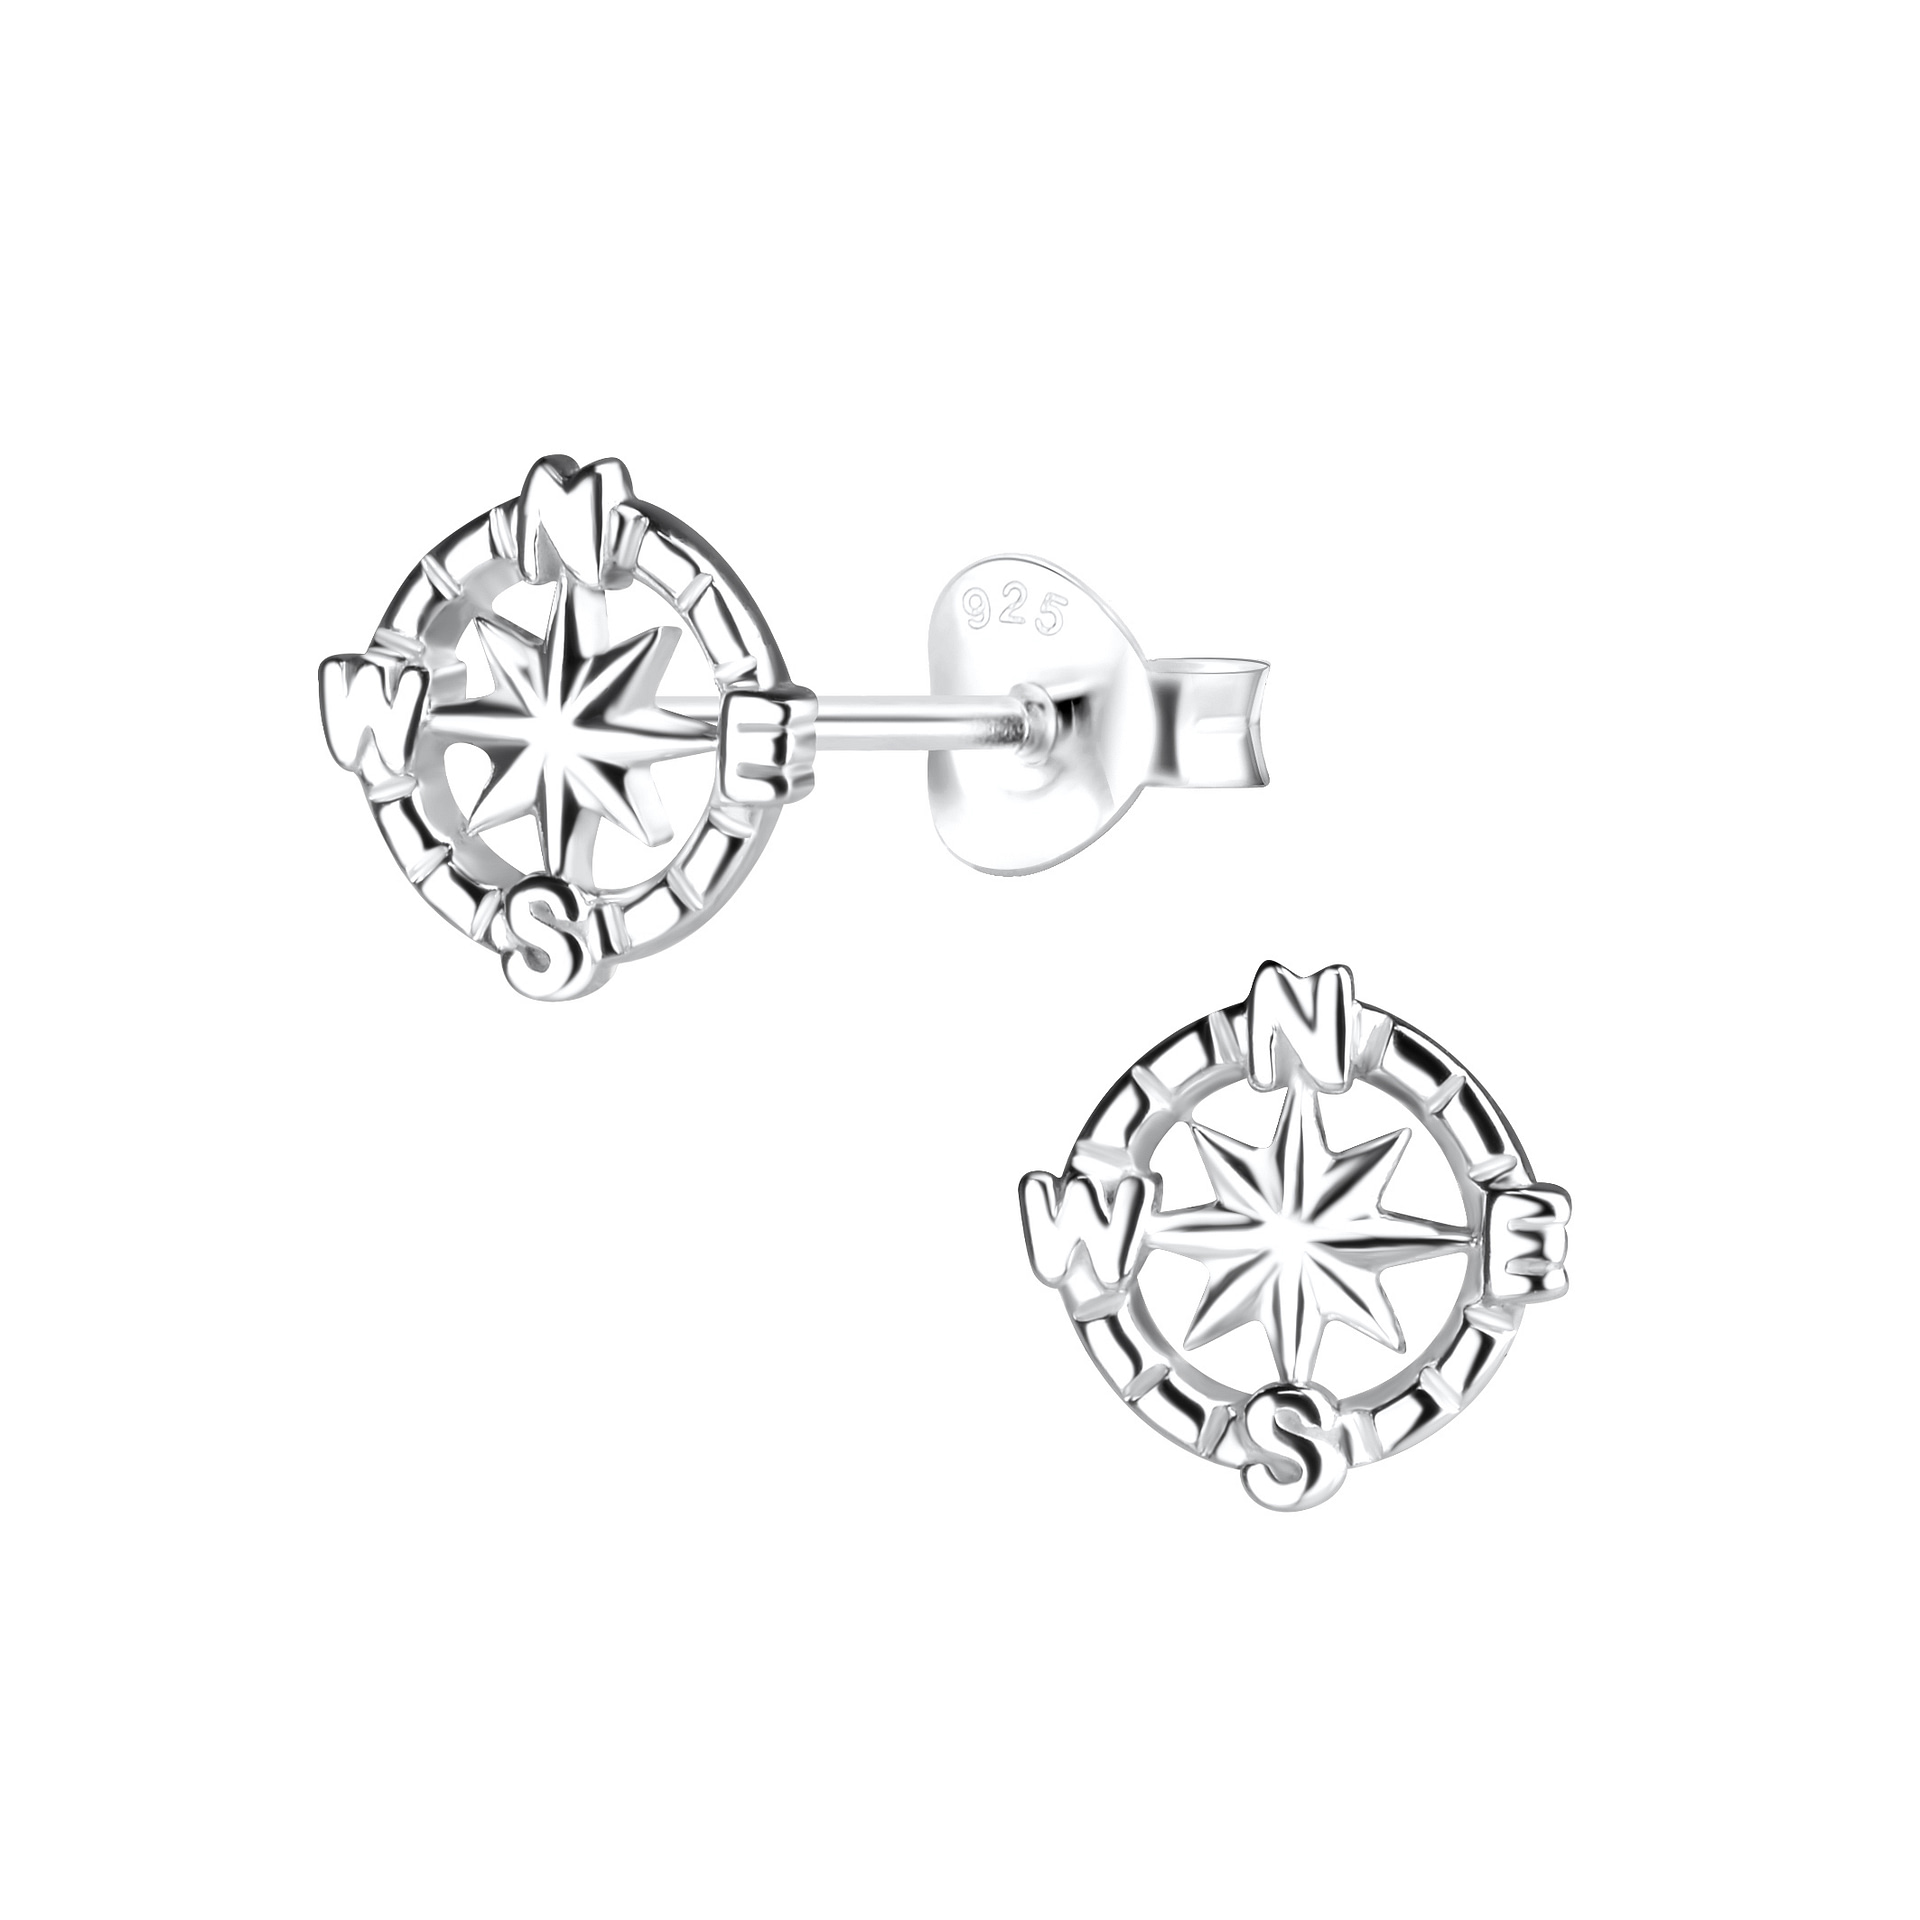 Details about   .925 Sterling Silver 14 MM Fancy Button Post Stud Earrings MSRP $95